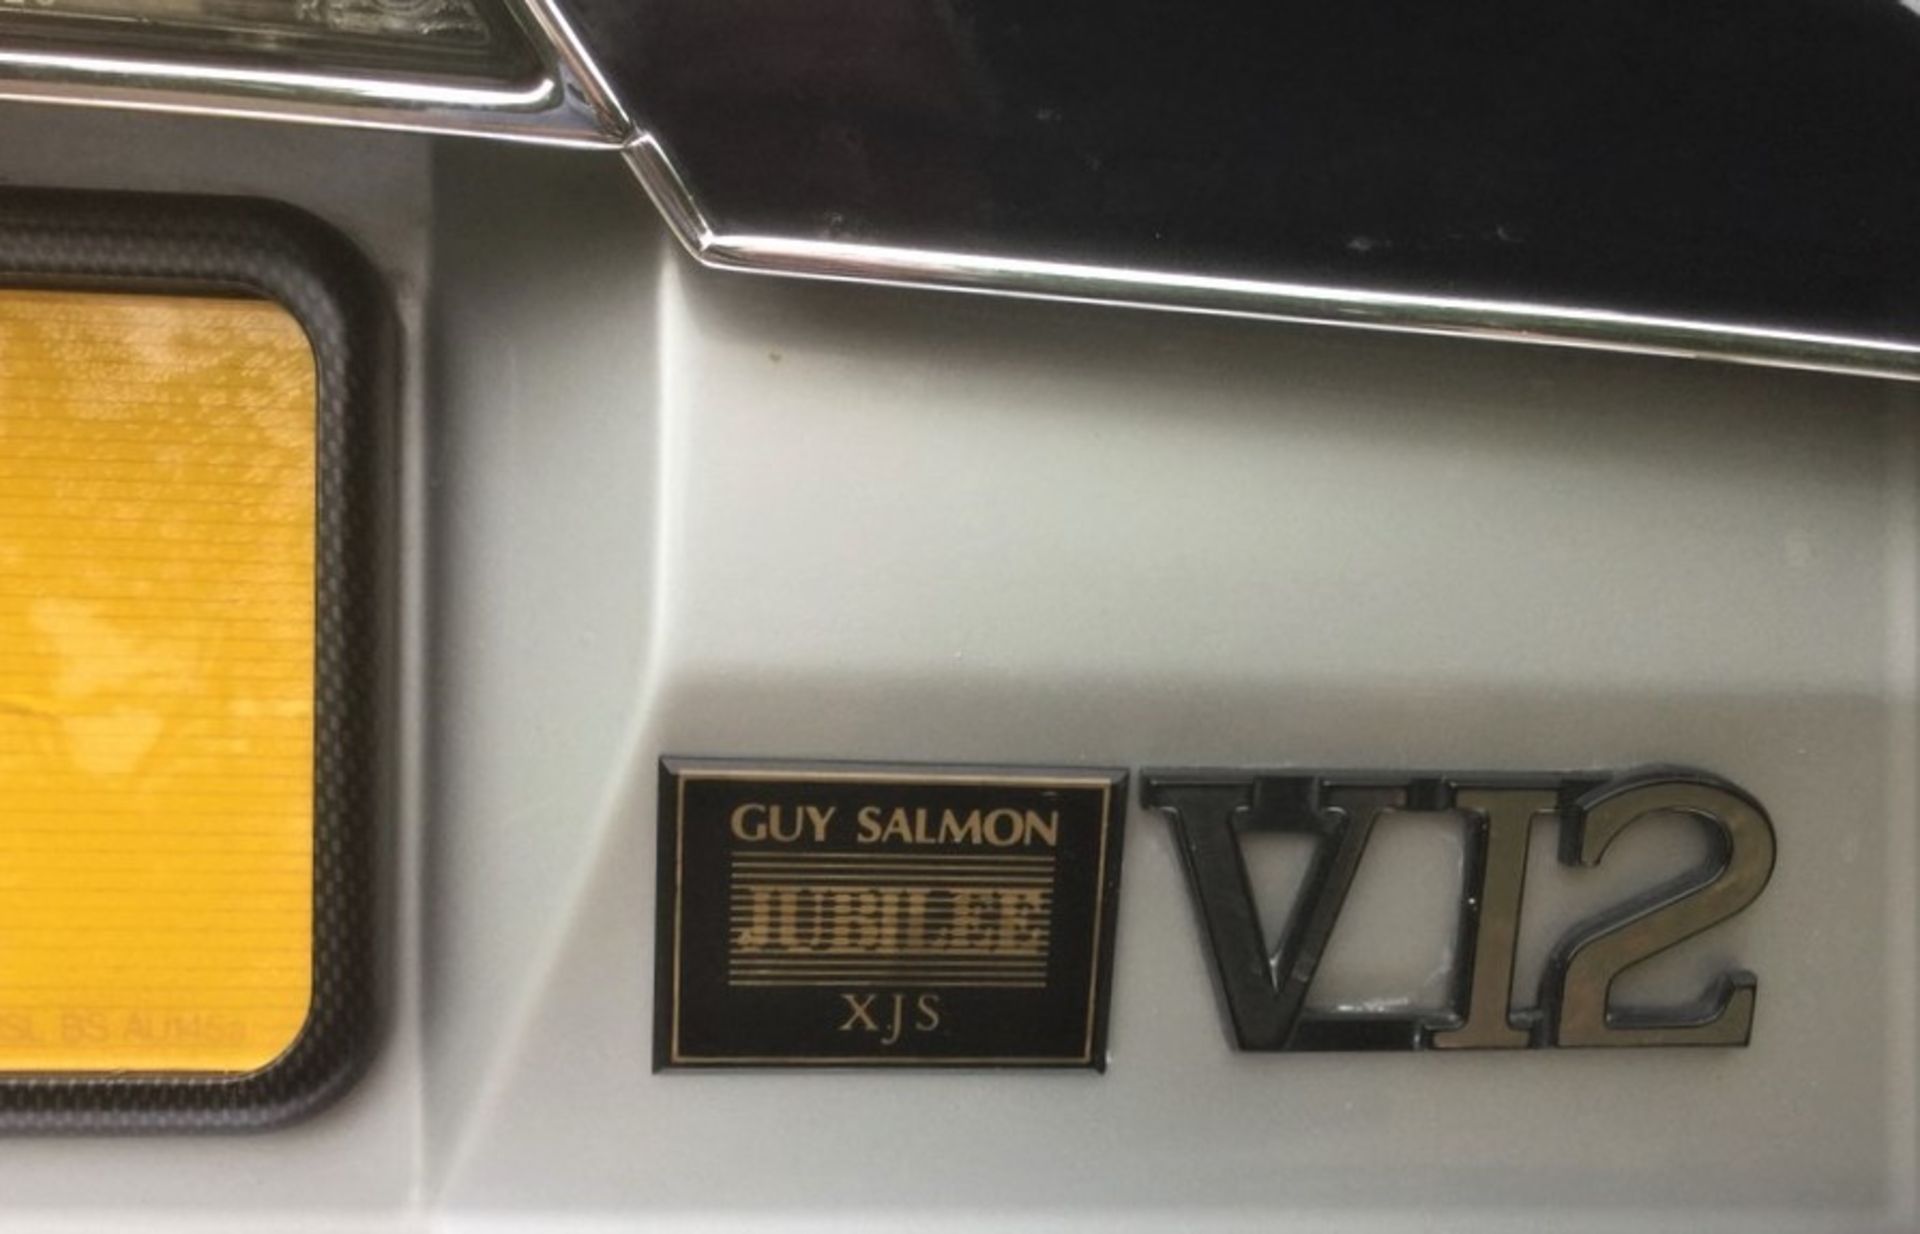 1987 JAGUAR XJS - GUY SALMON JUBILEE EDITION Registration Number: SIJ 149 Chassis Number: - Bild 11 aus 13